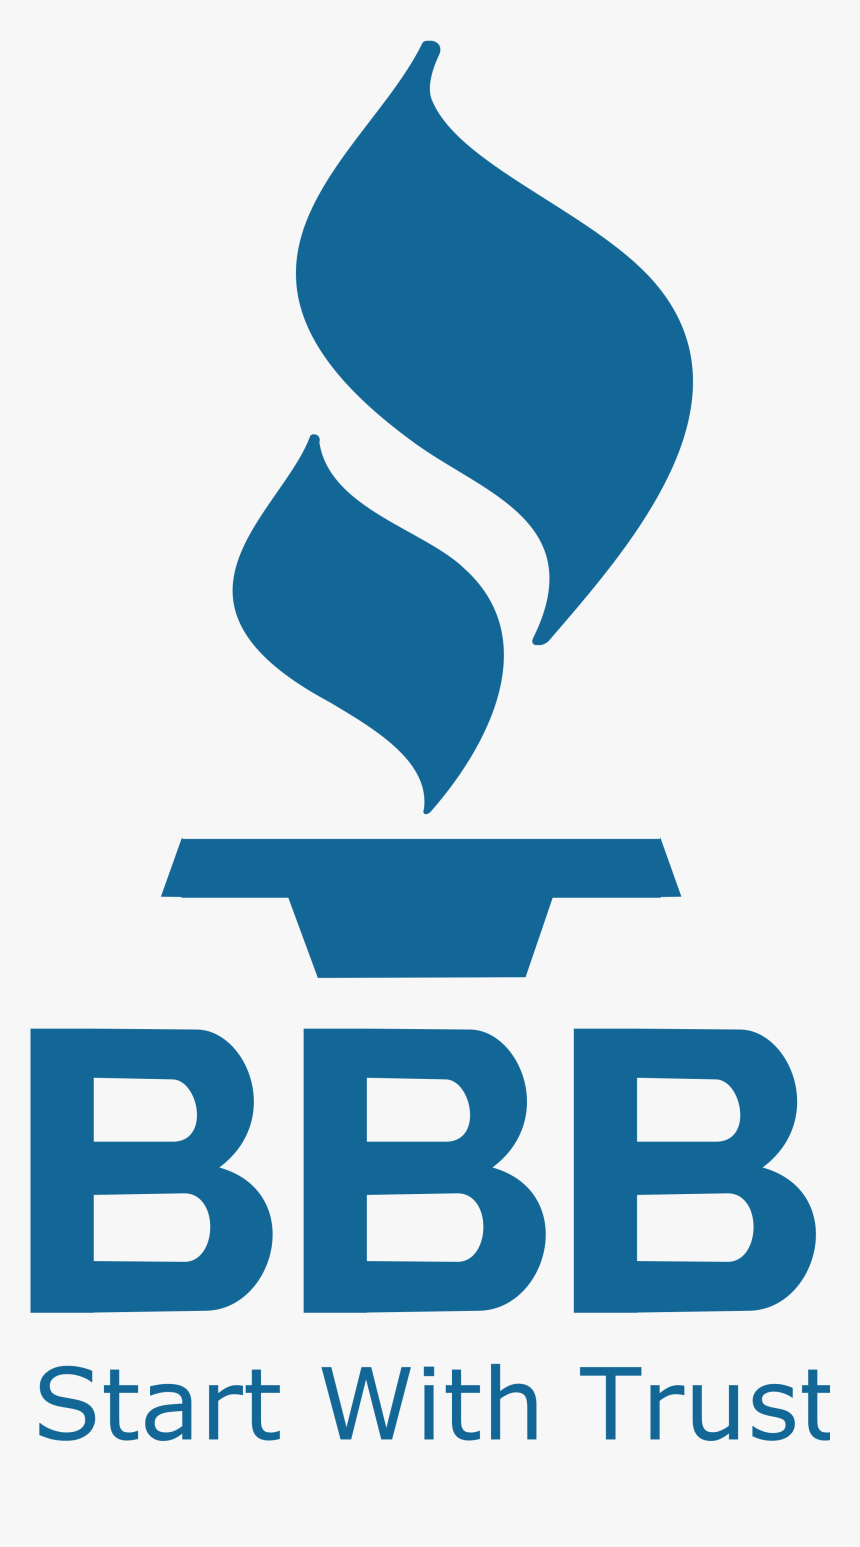 BBBB logo HD Free Better business bureau logo